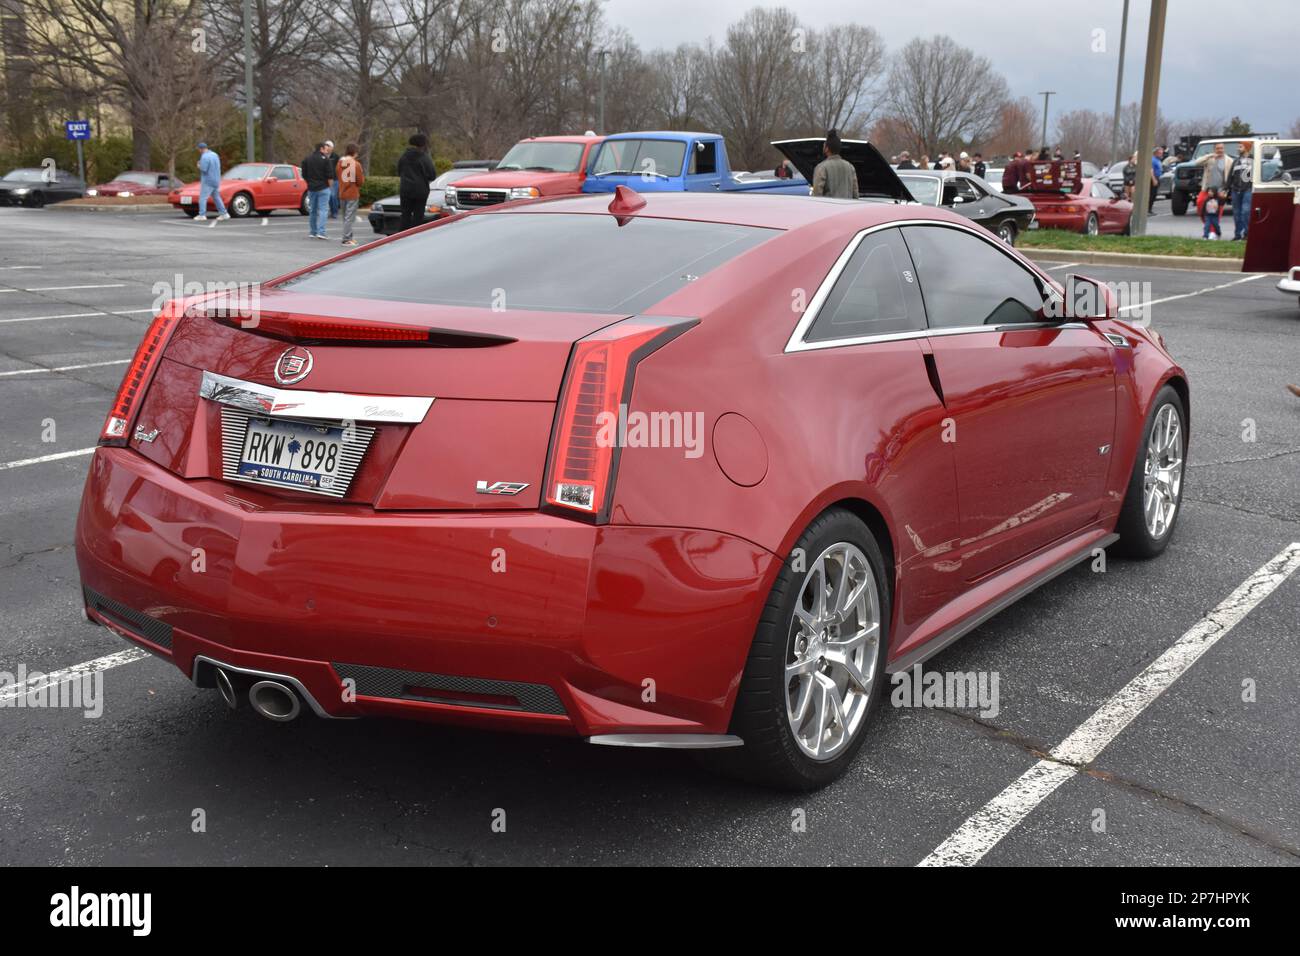 A Cadillac CTS V on display at a car show. Stock Photo